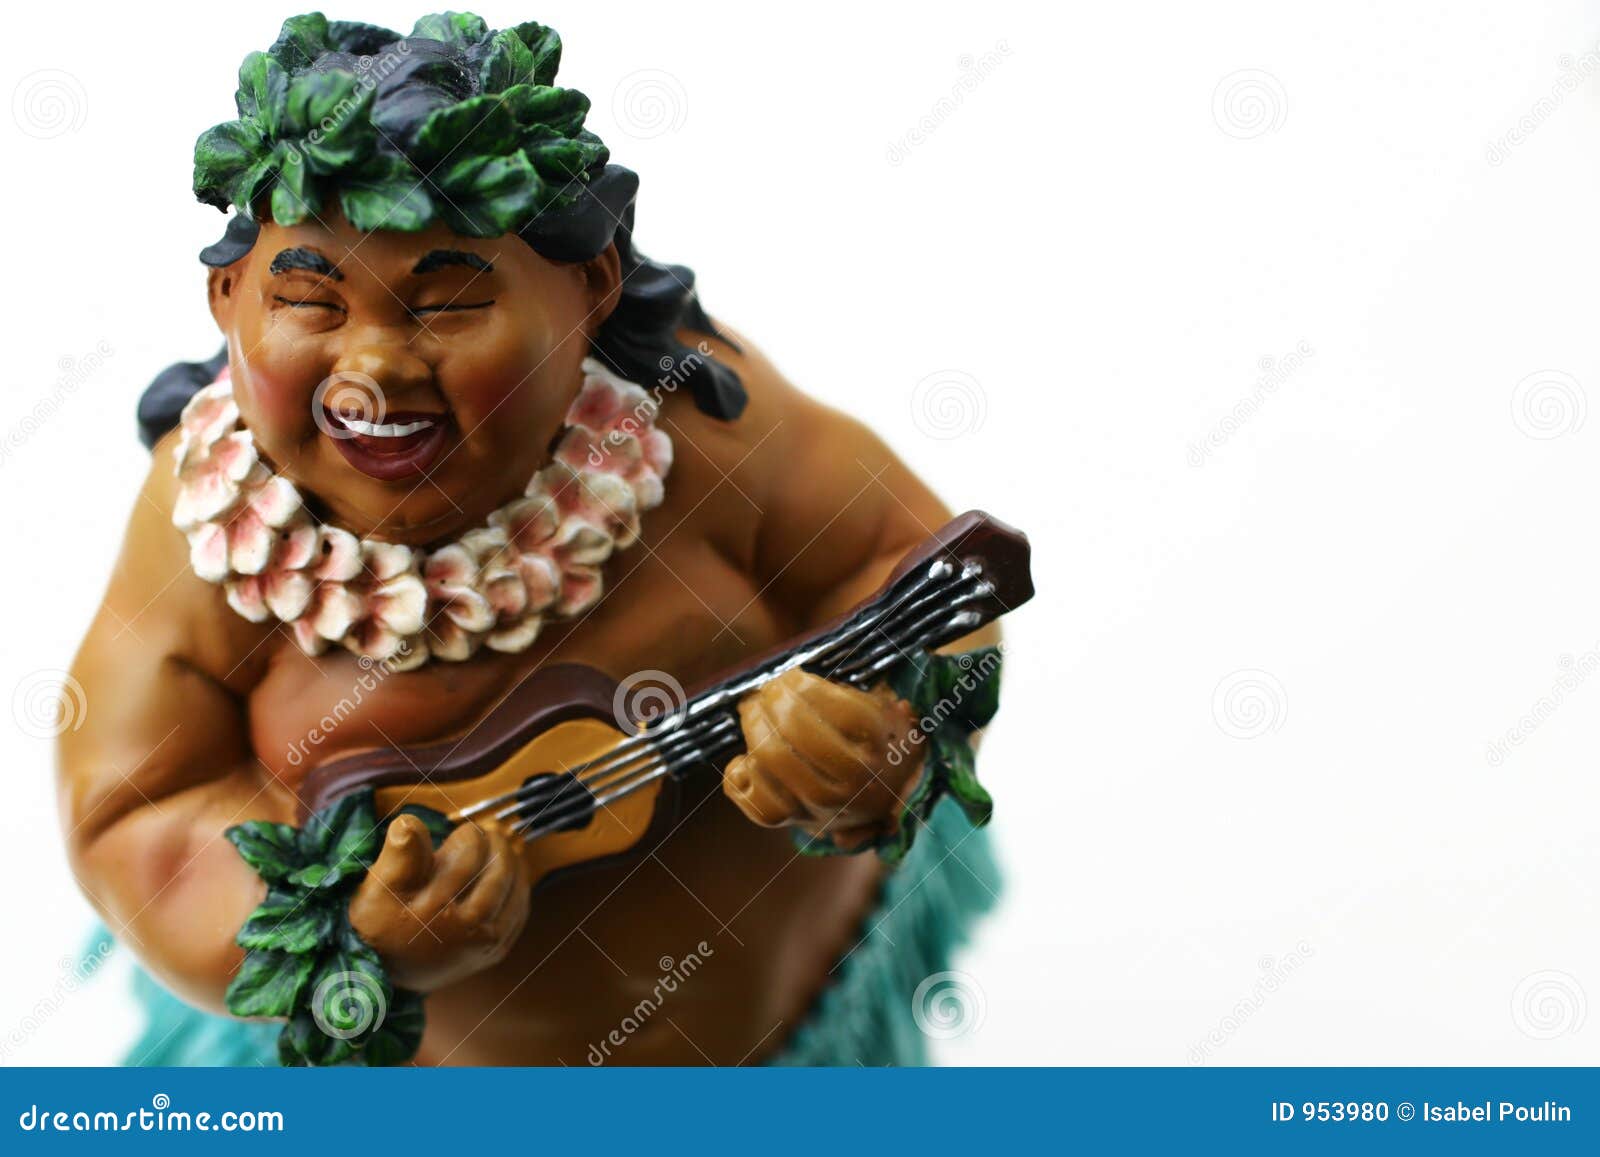 man playing music stock photo. Image smile, hawai - 953980